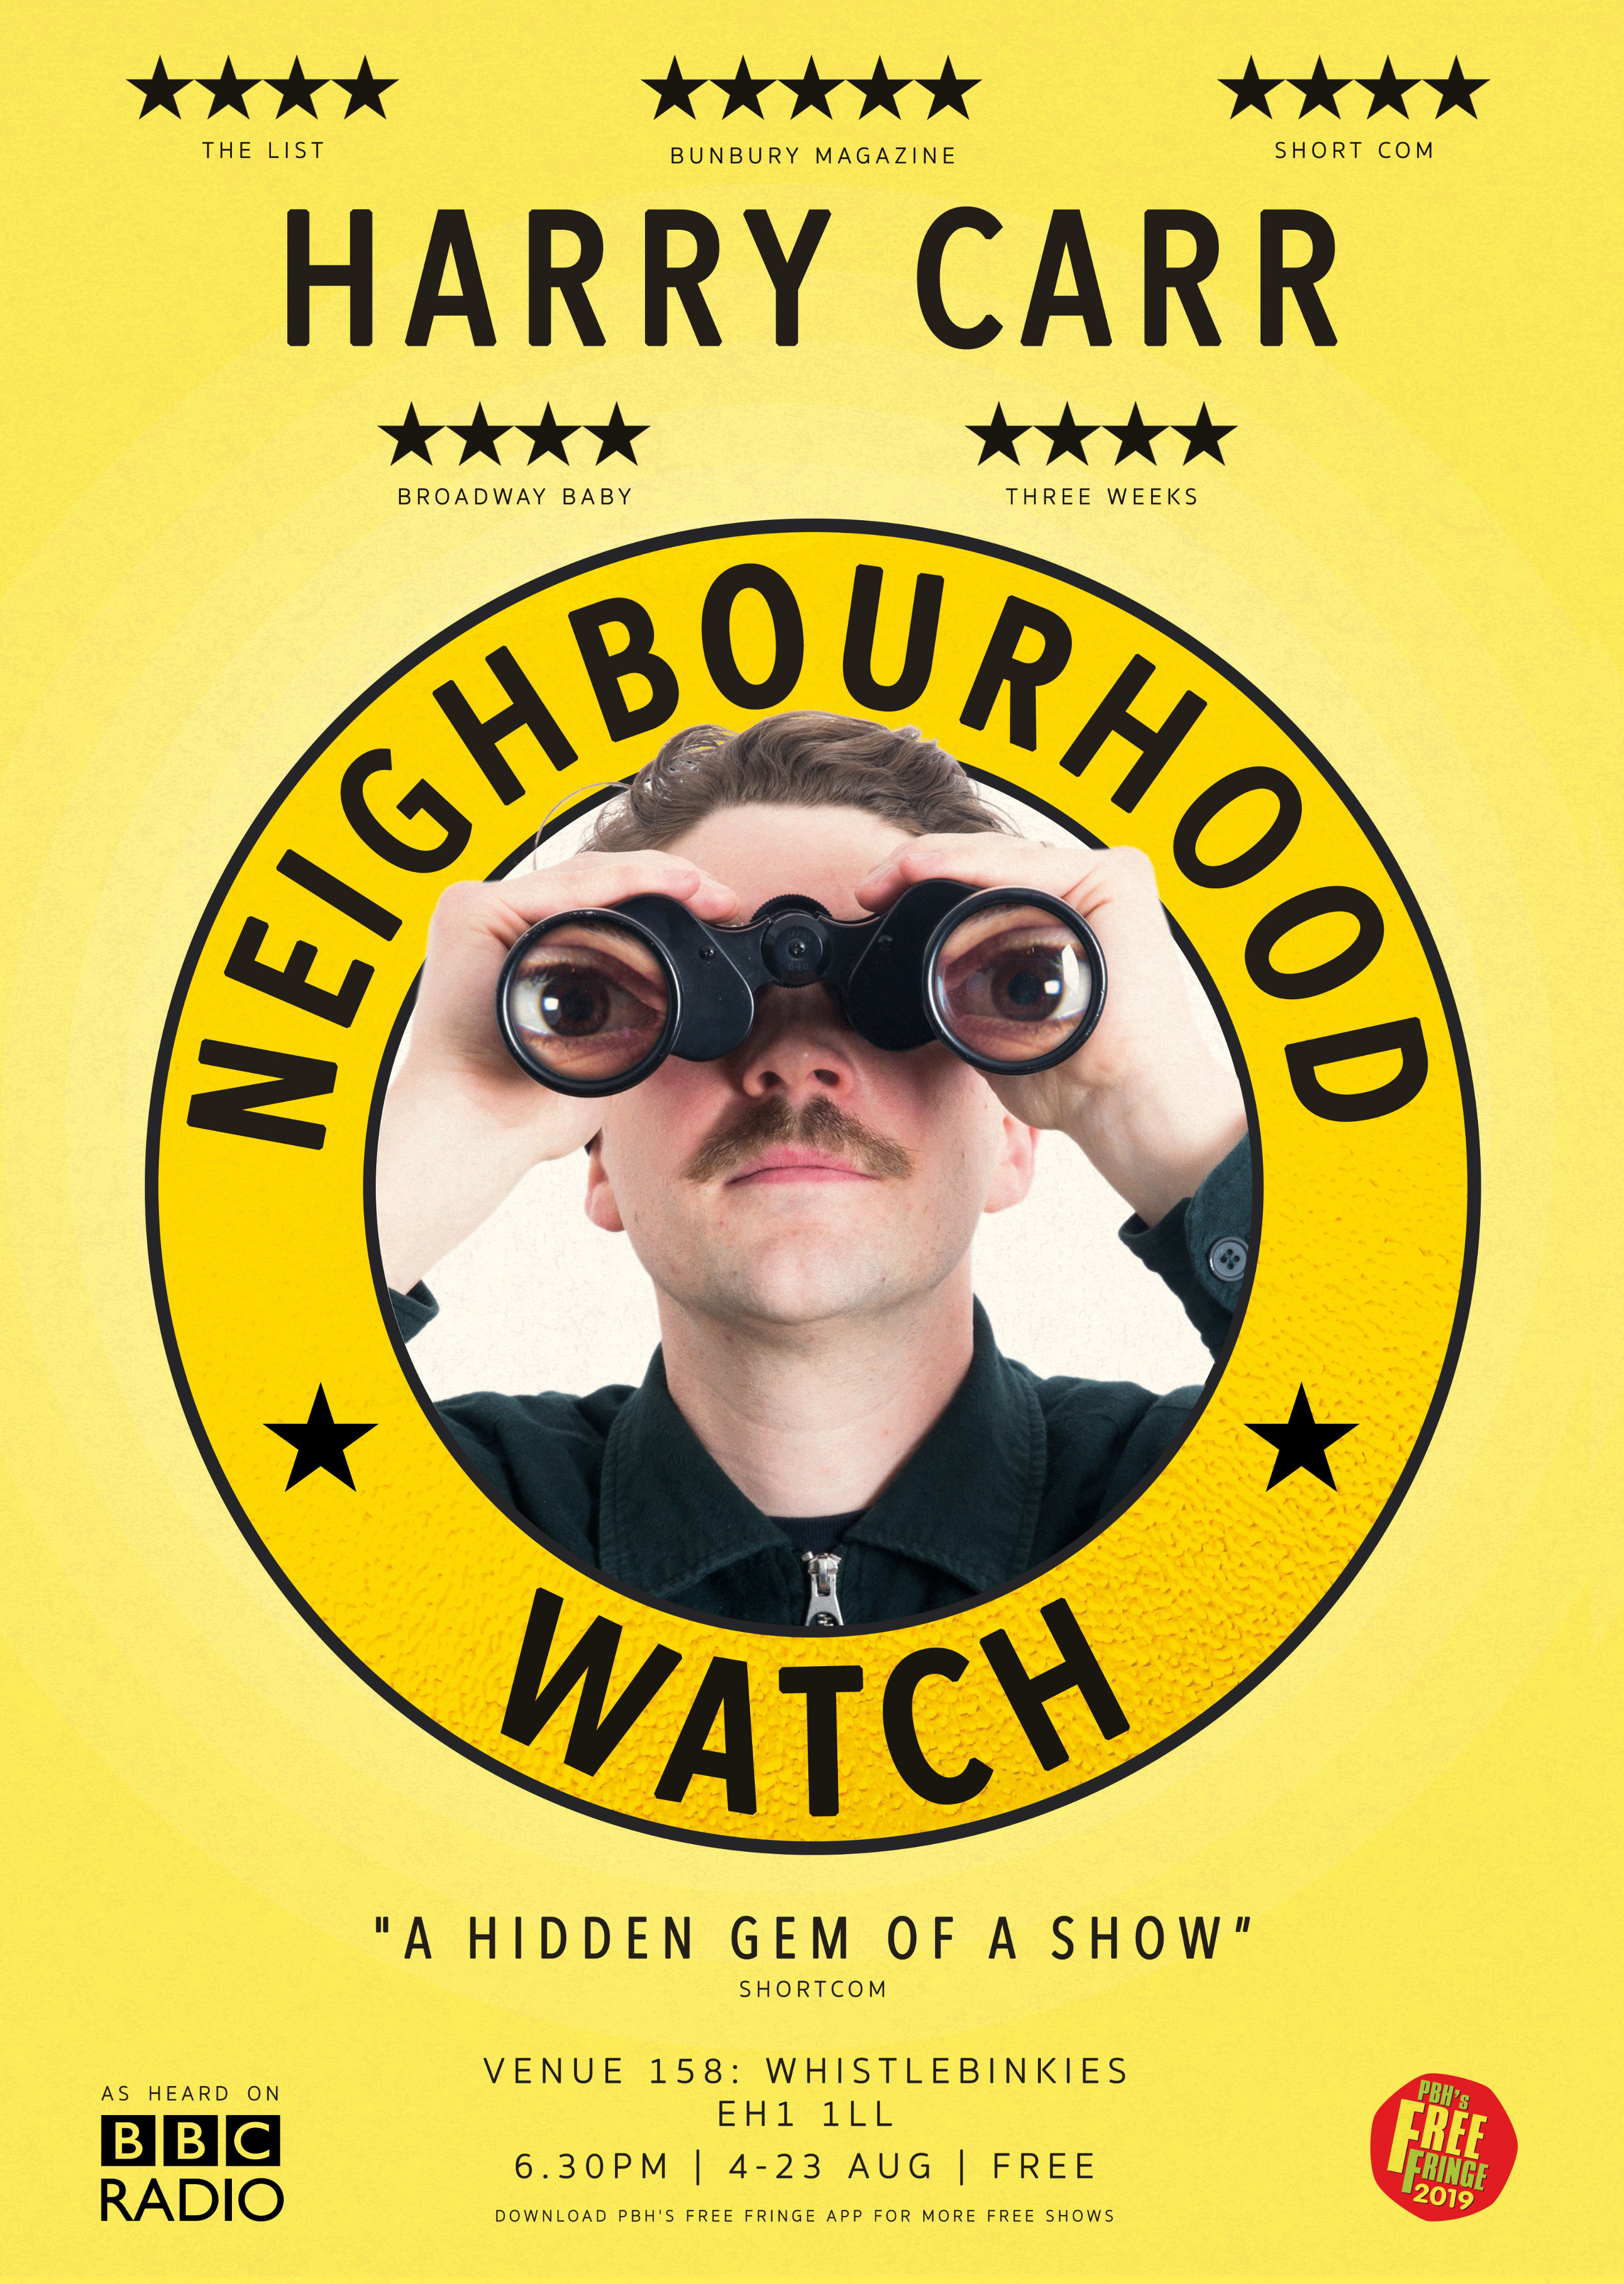 The poster for Harry Carr: Neighbourhood Watch